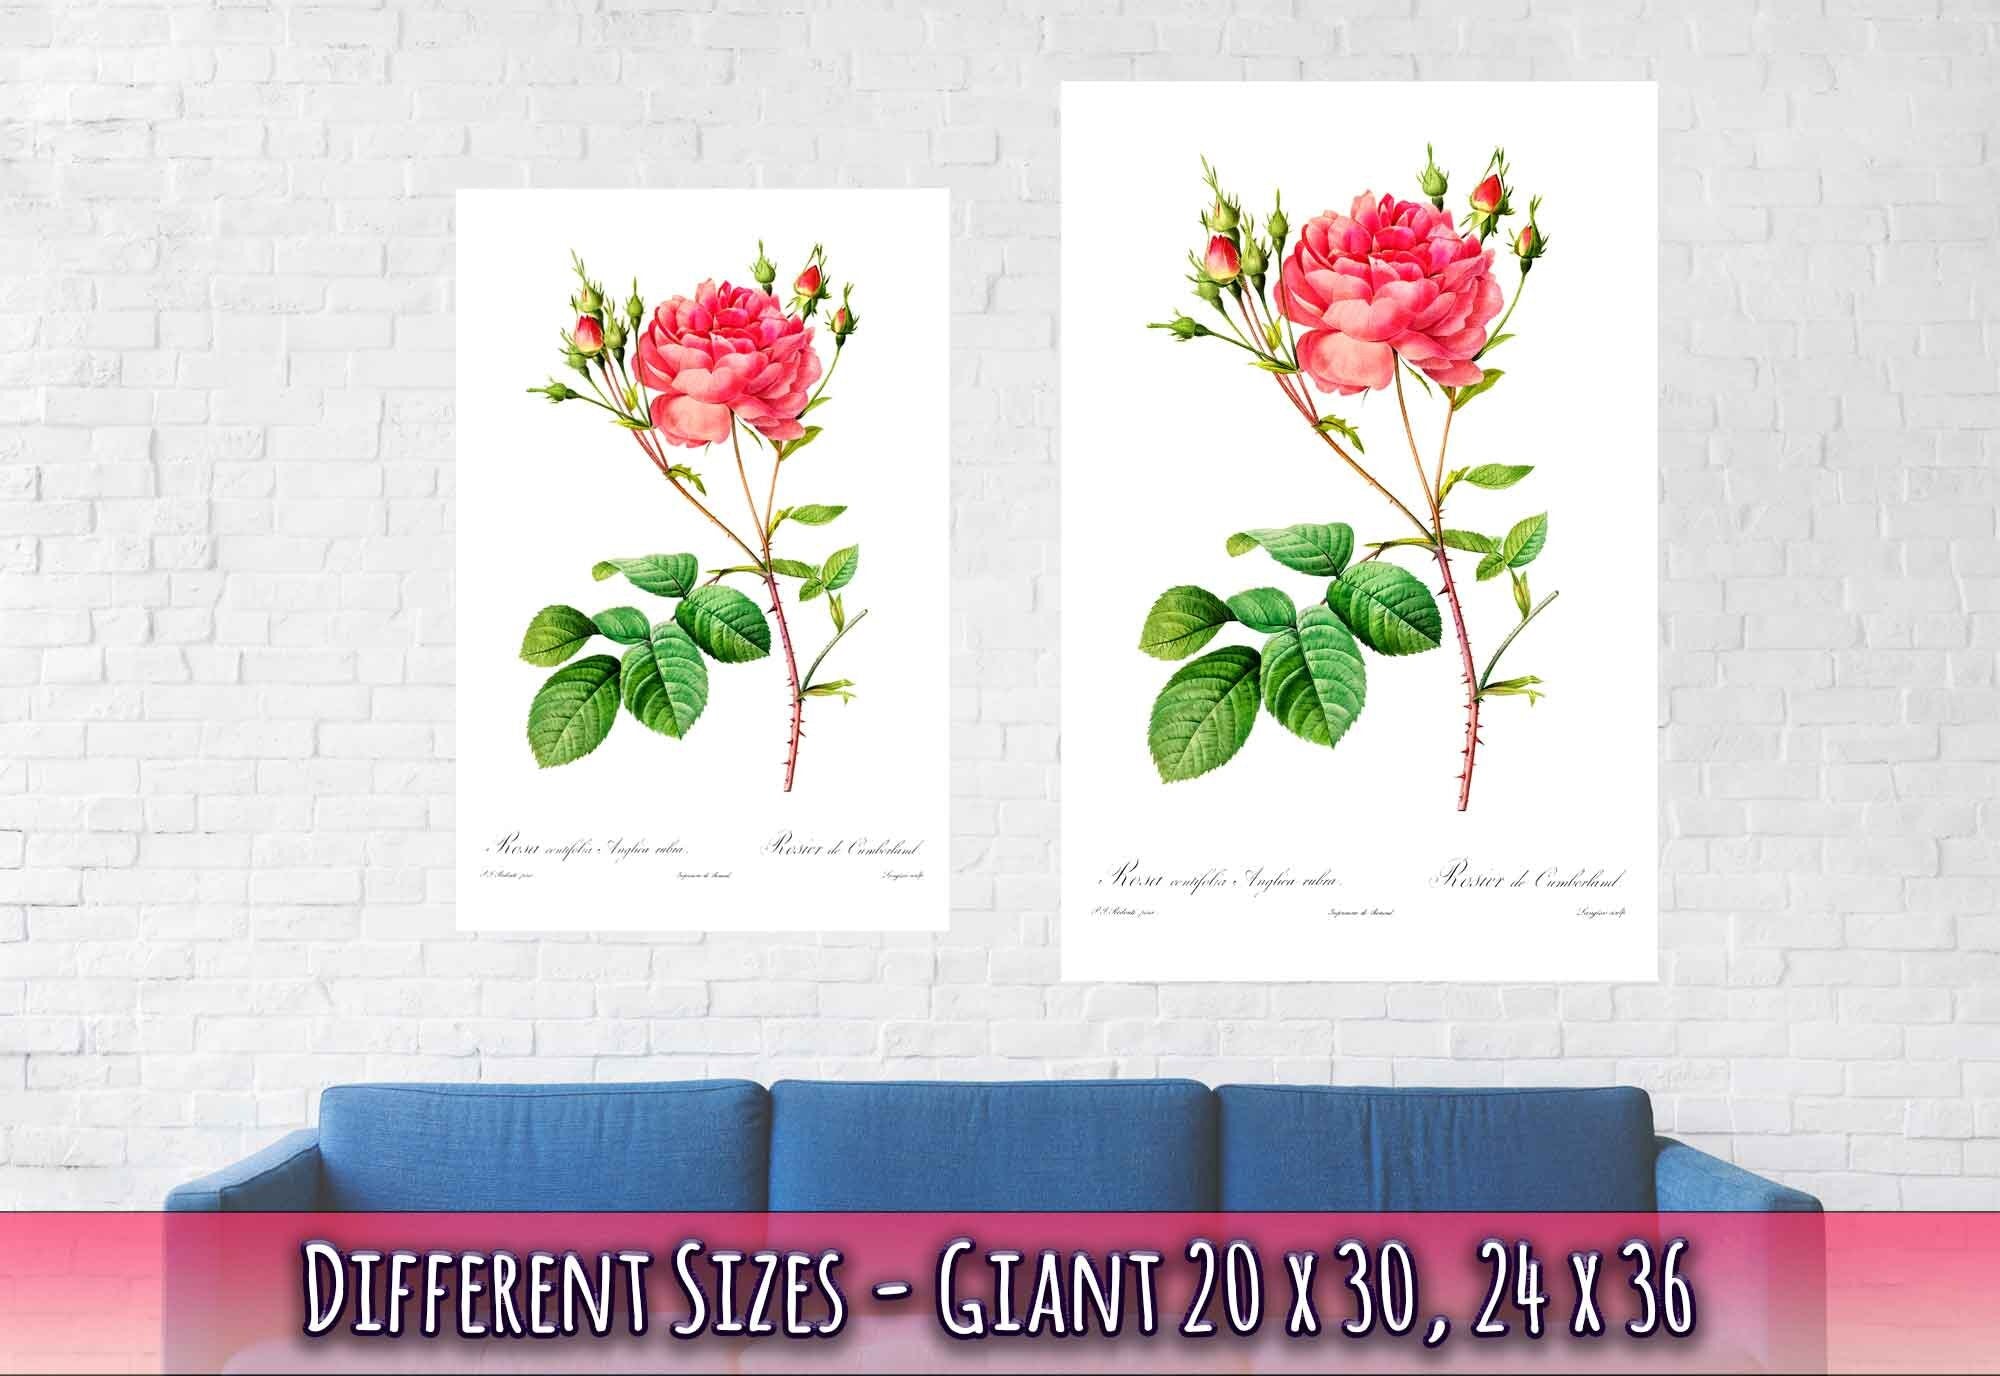 Vintage Rose Print - Flower Wall Art - Rosa Centifolia - Pierre Joseph Redoute Botanical Artist - WallArtPrints4U